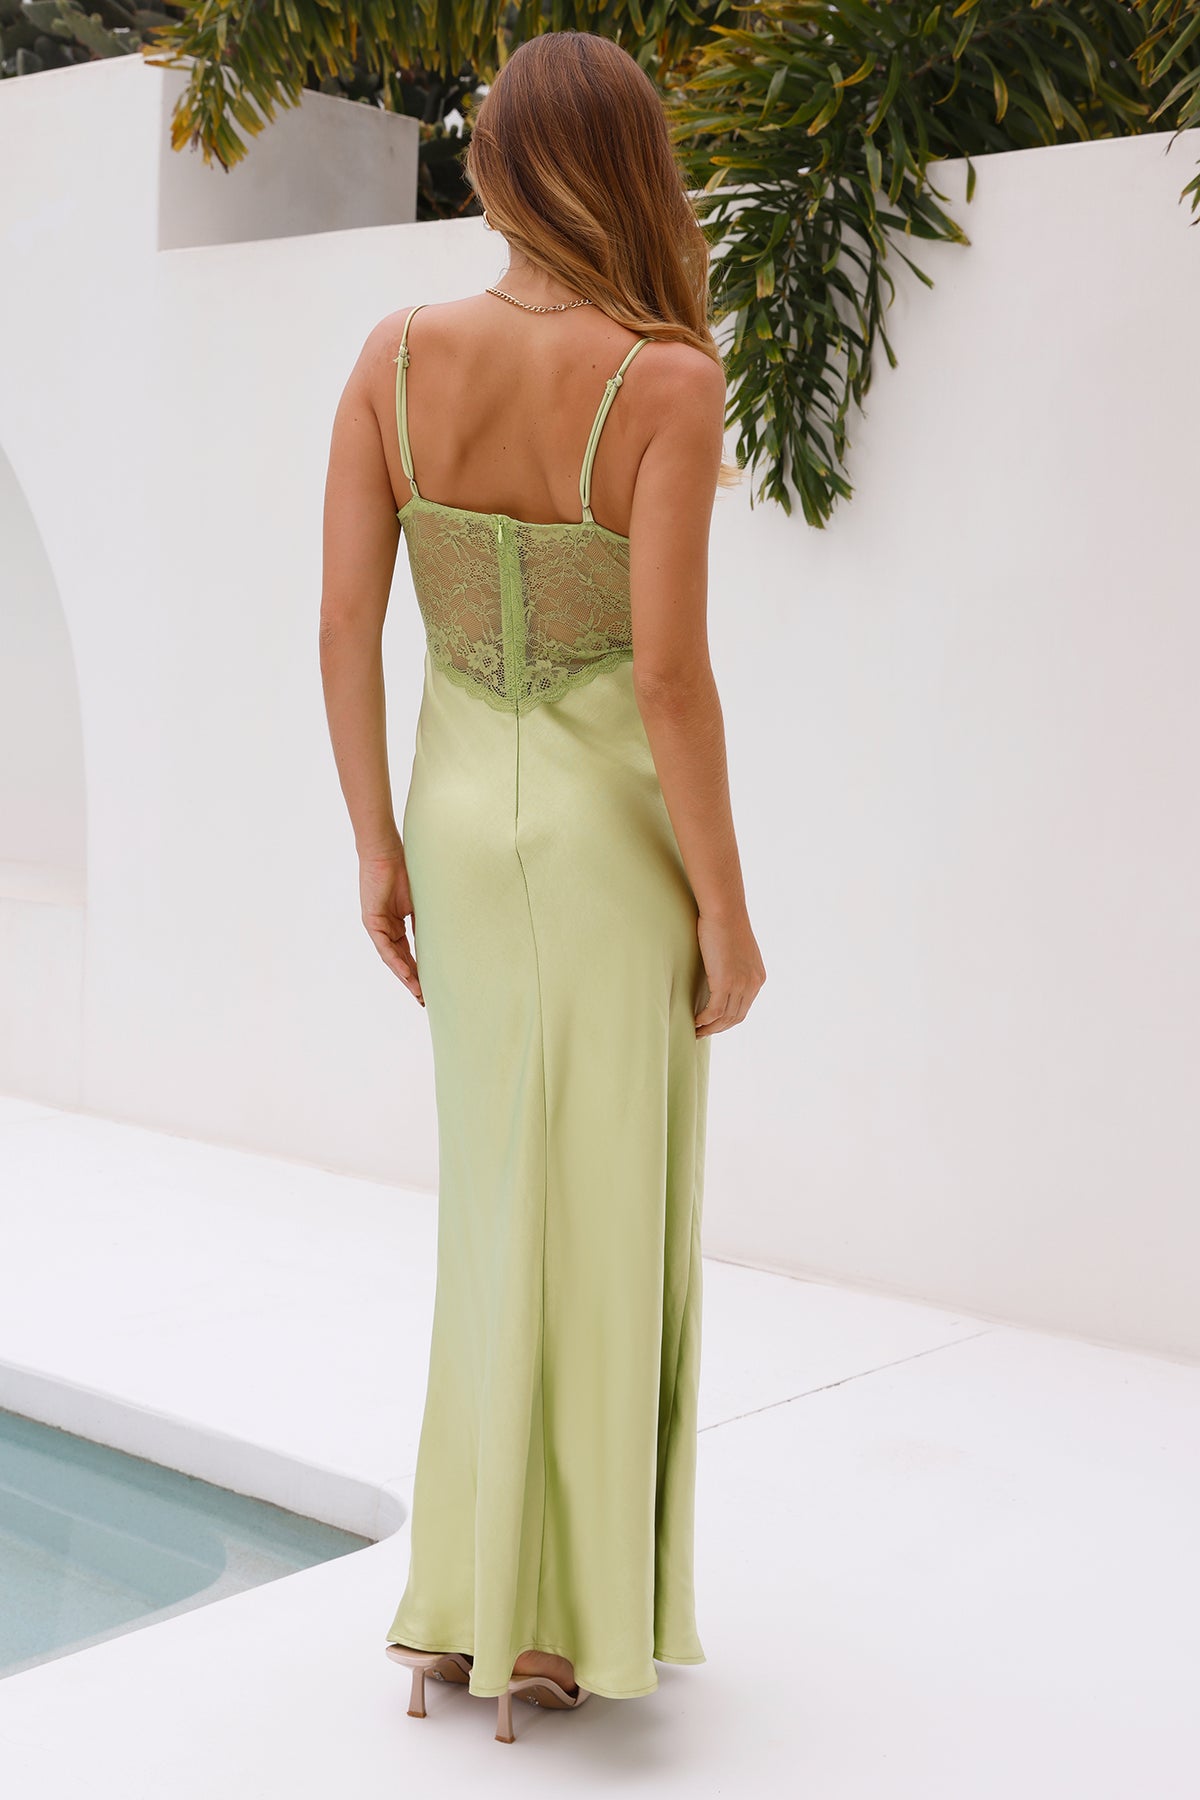 Shop Formal Dress - Make My Night Satin Maxi Dress Green fourth image